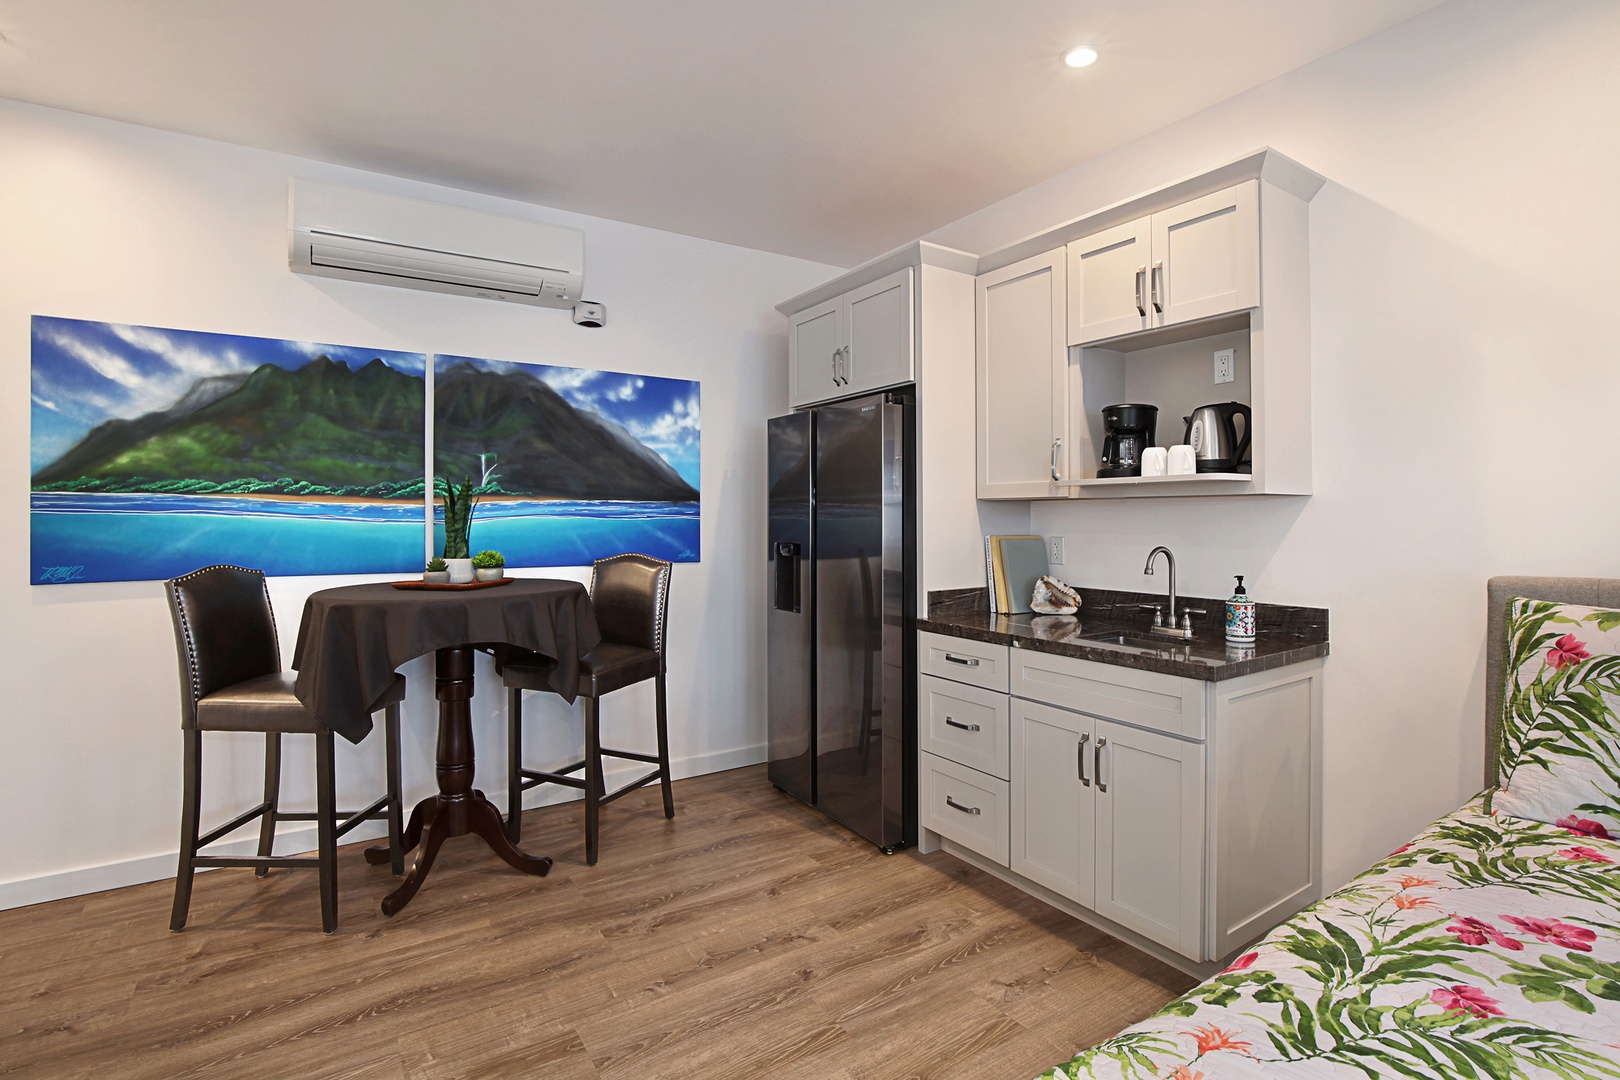 Koloa Vacation Rentals, Haupu Hale at Poipu - Twin bedroom with kitchenette